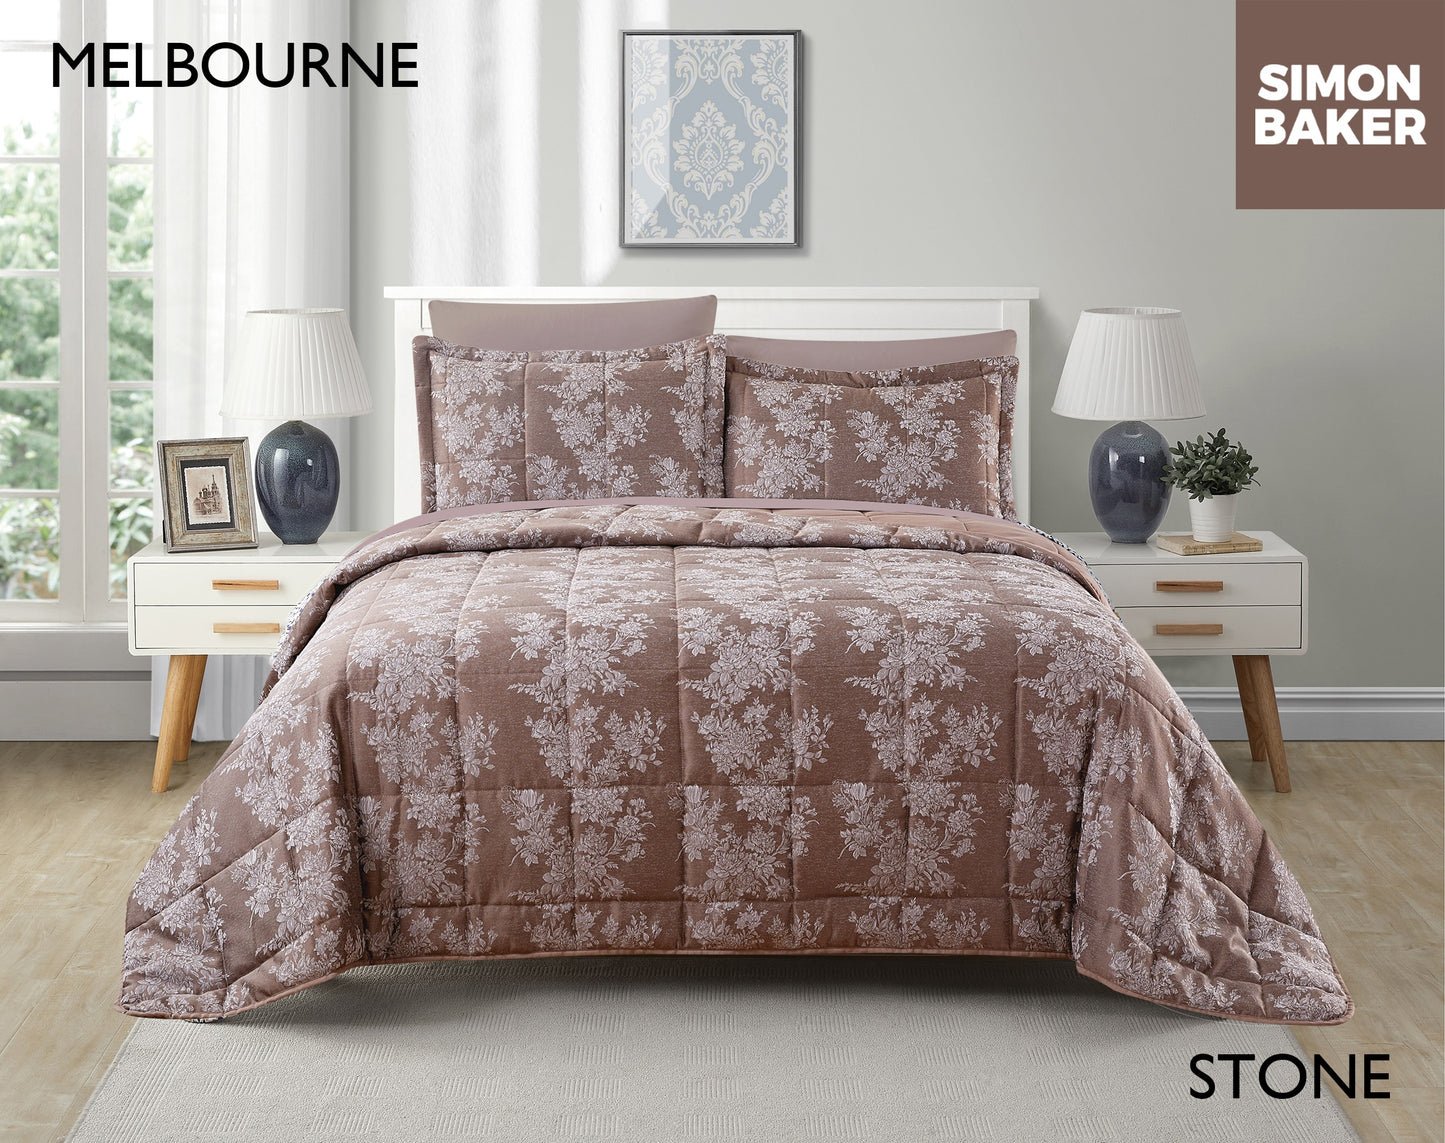 Simon Baker | Melbourne Comforter - Stone (Various Sizes)